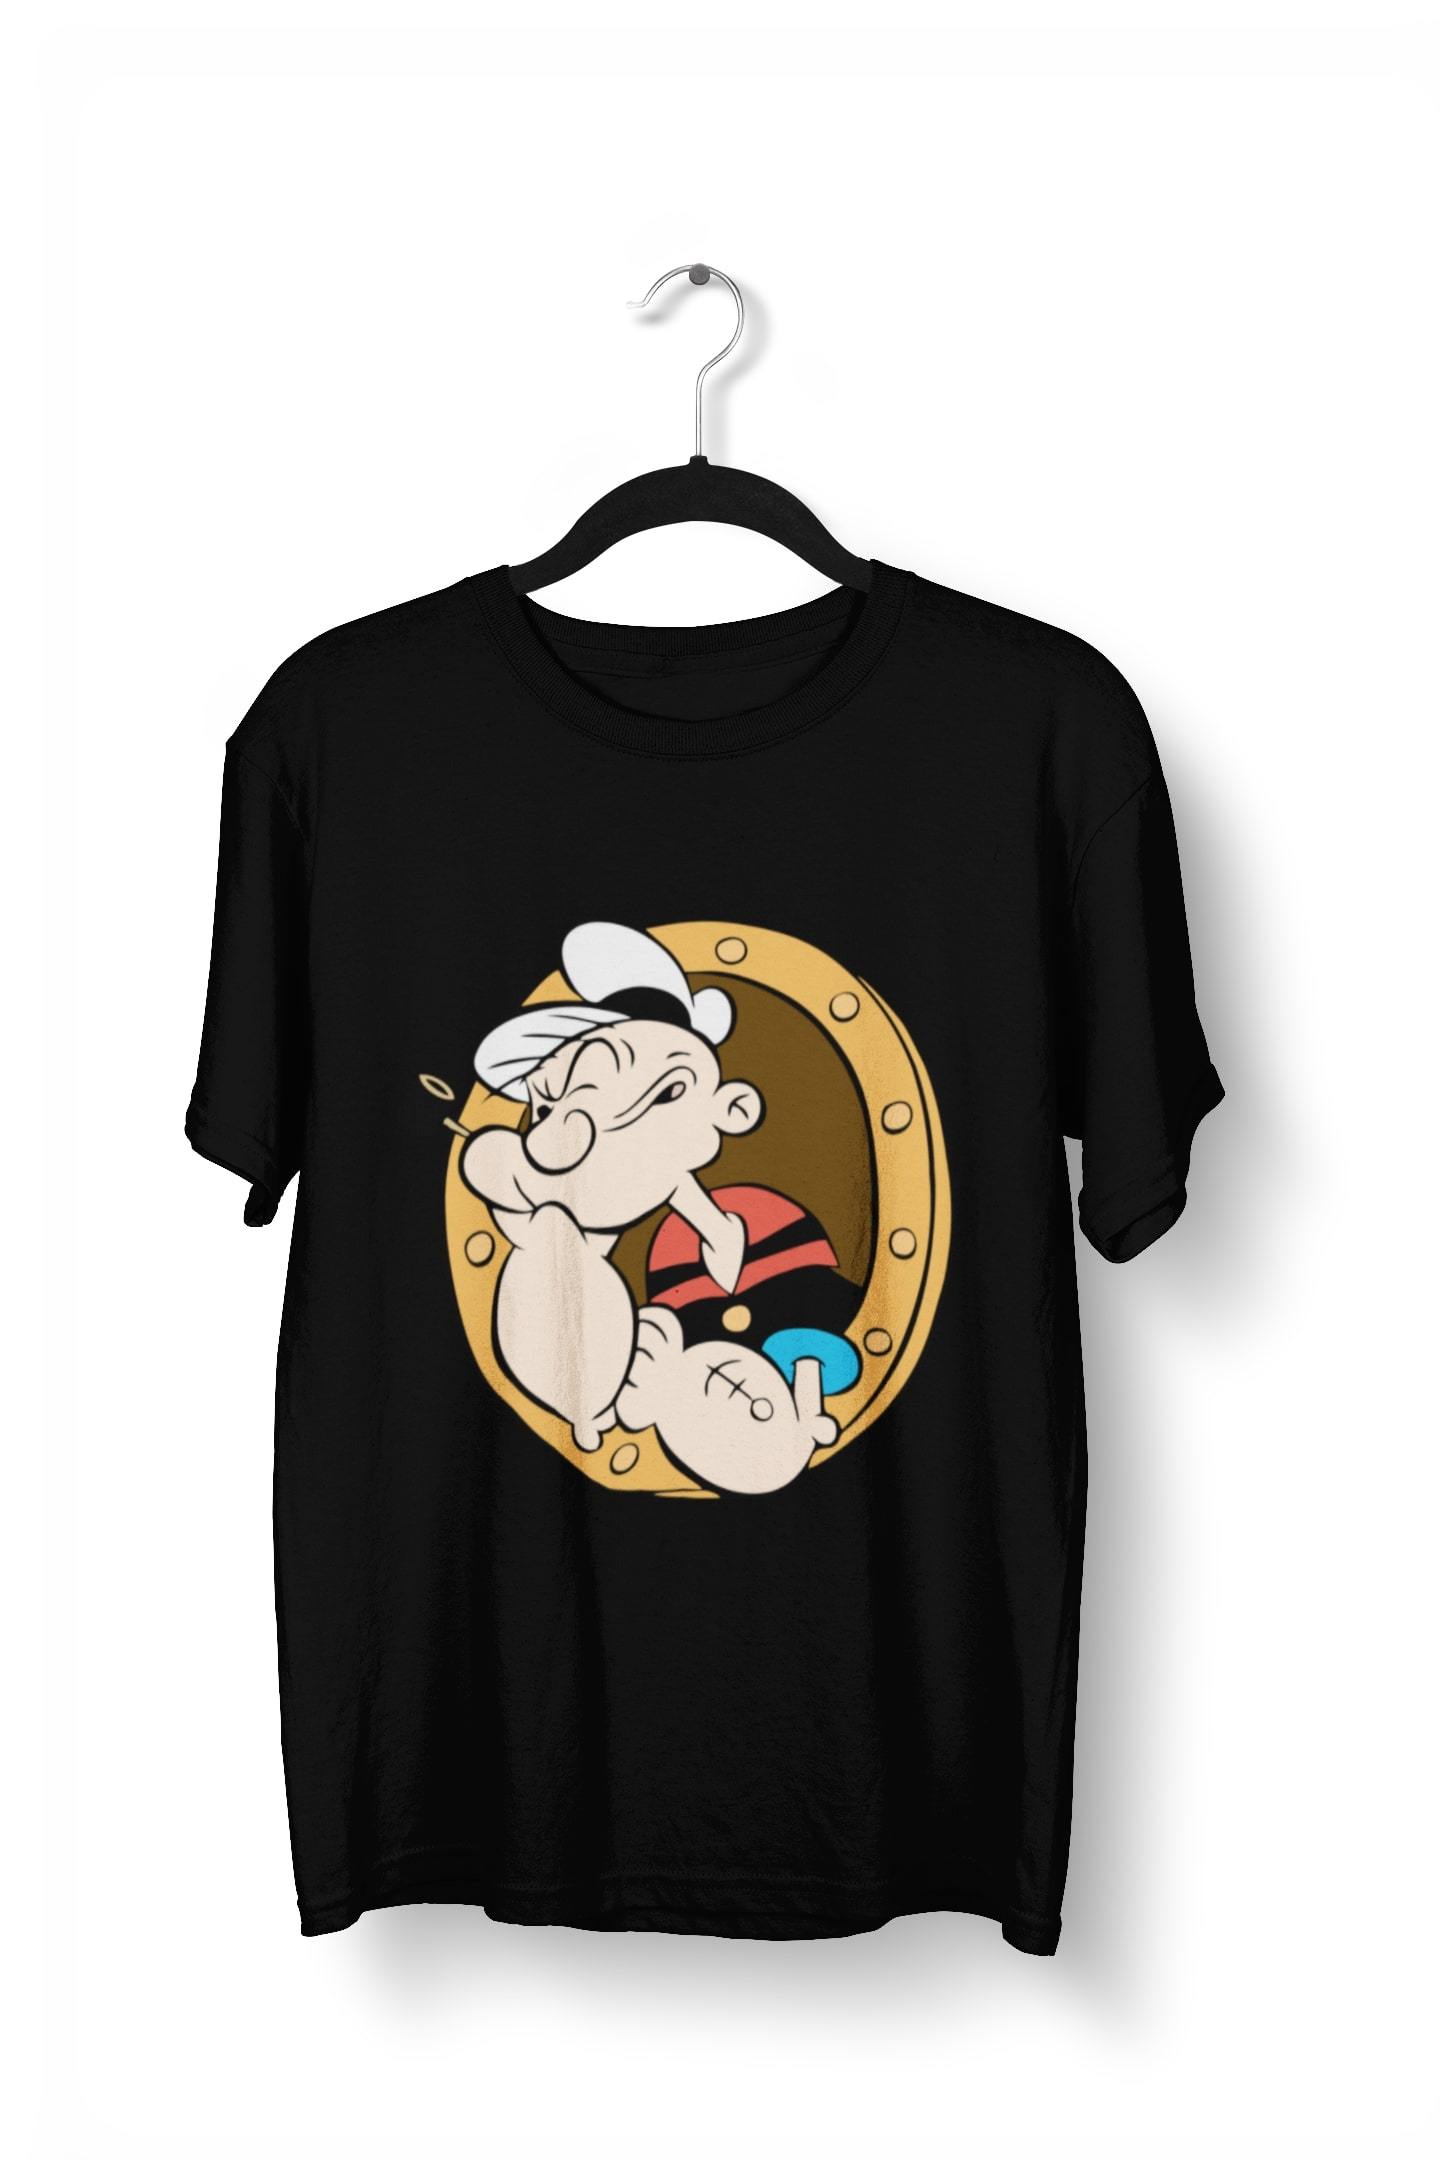 thelegalgang,Popeye Through the Window T-Shirt for Men,.